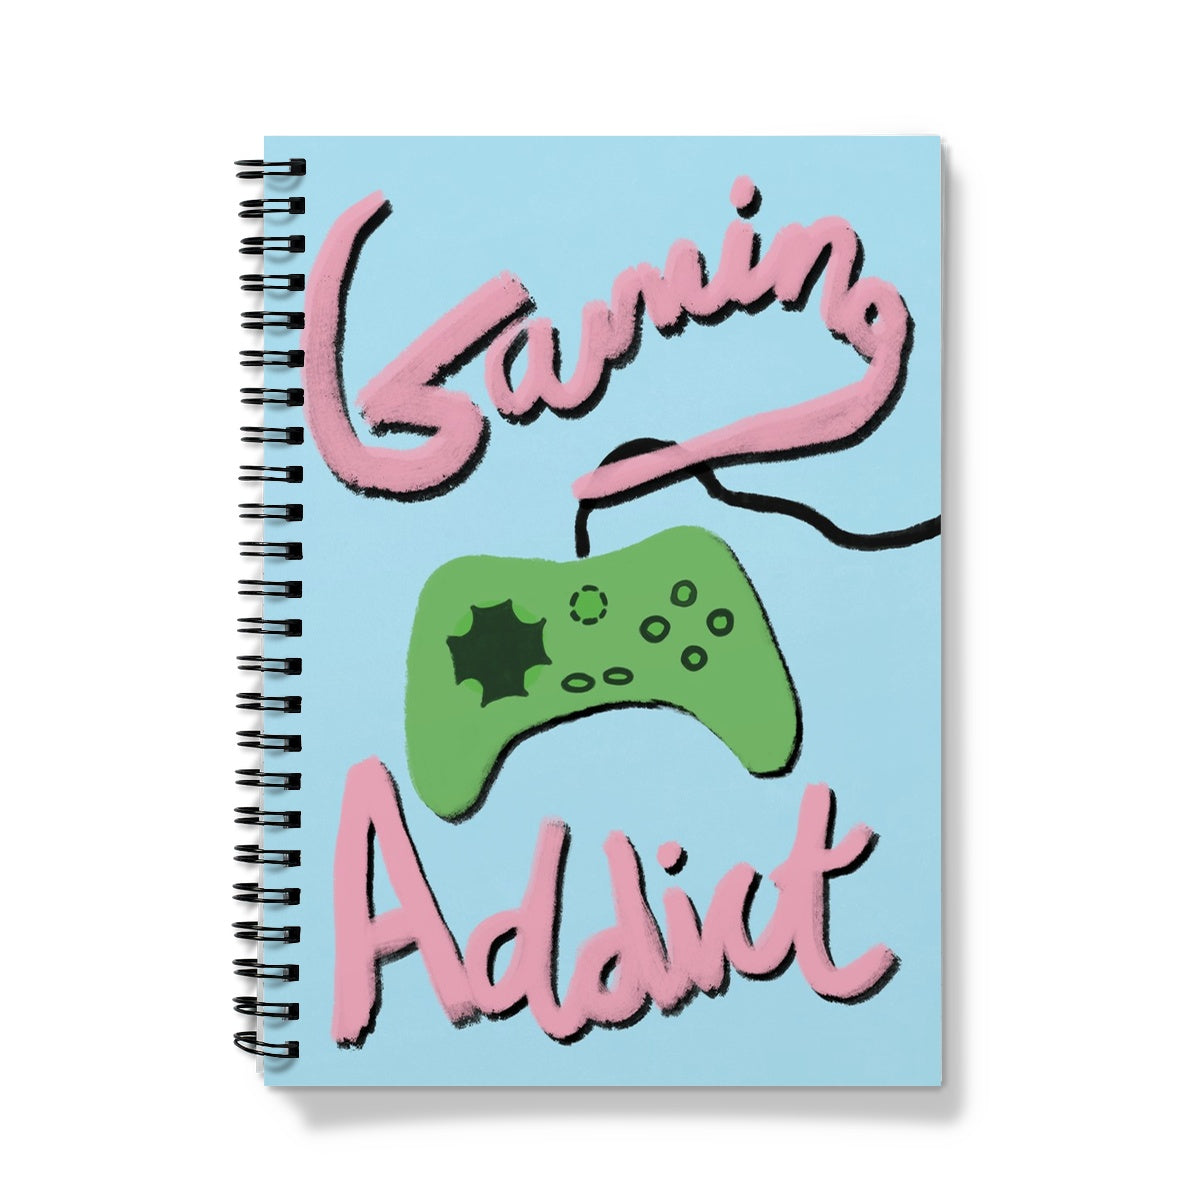 Gaming Addict Print - Light Blue, Pink, Green Notebook